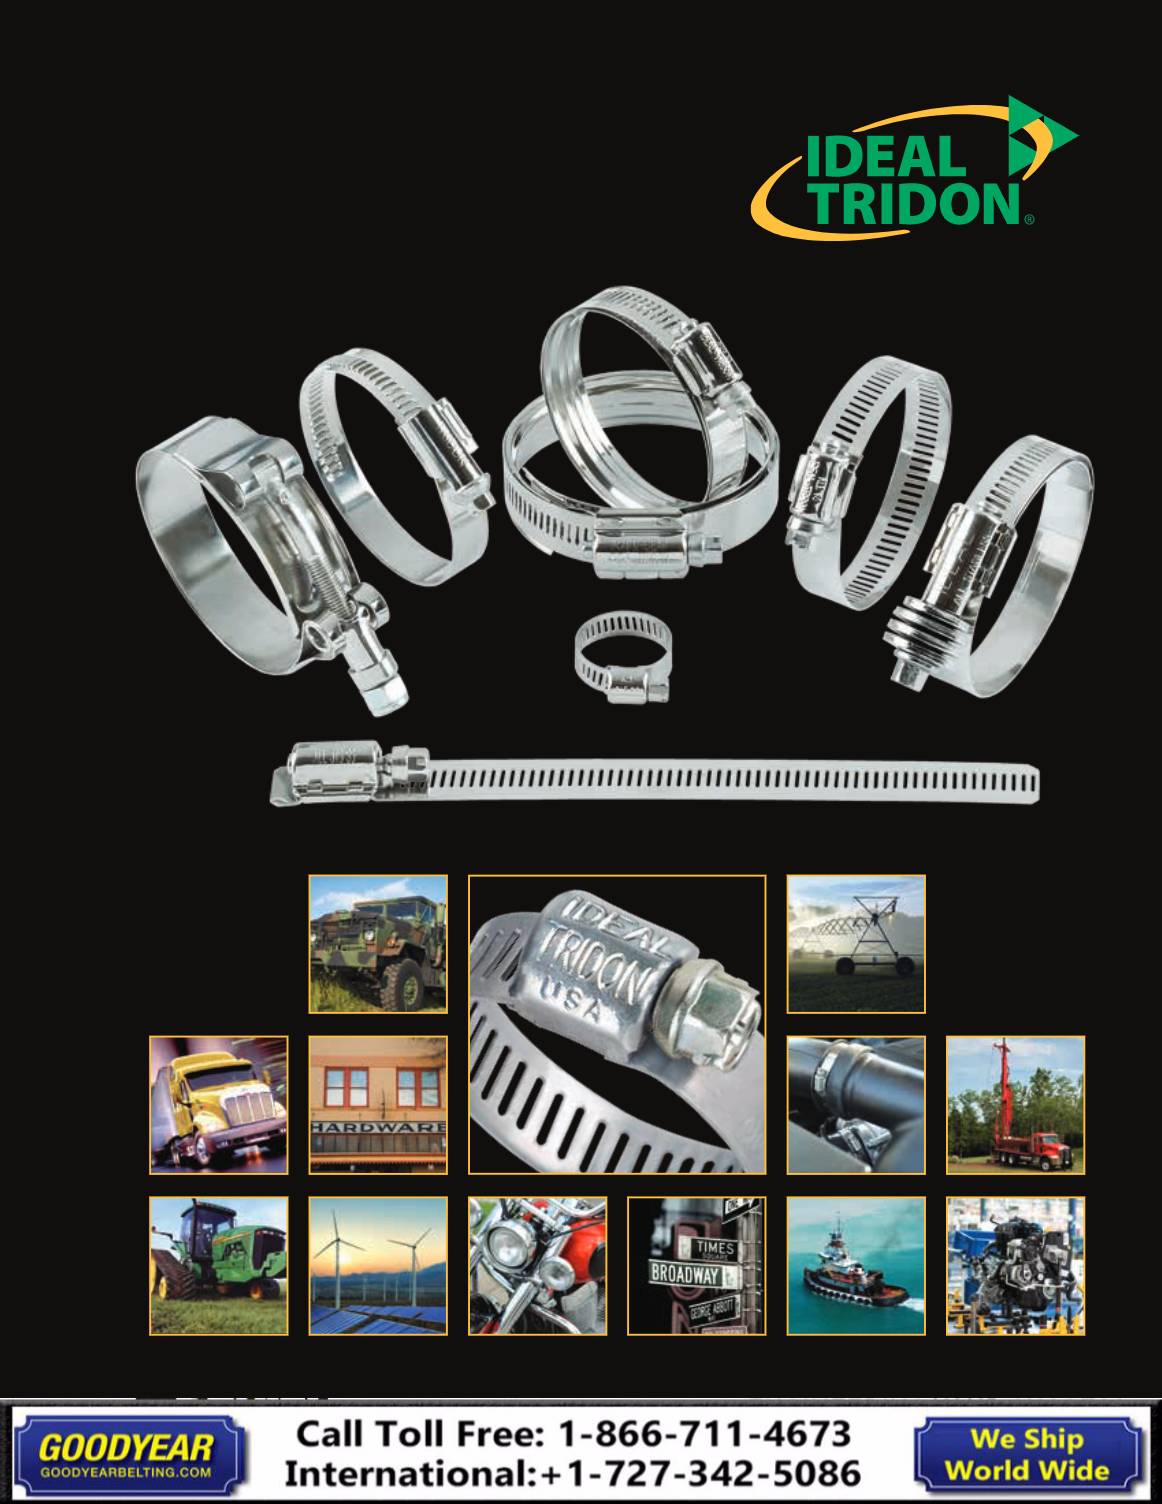 Ideal Tridon Catalog 2018